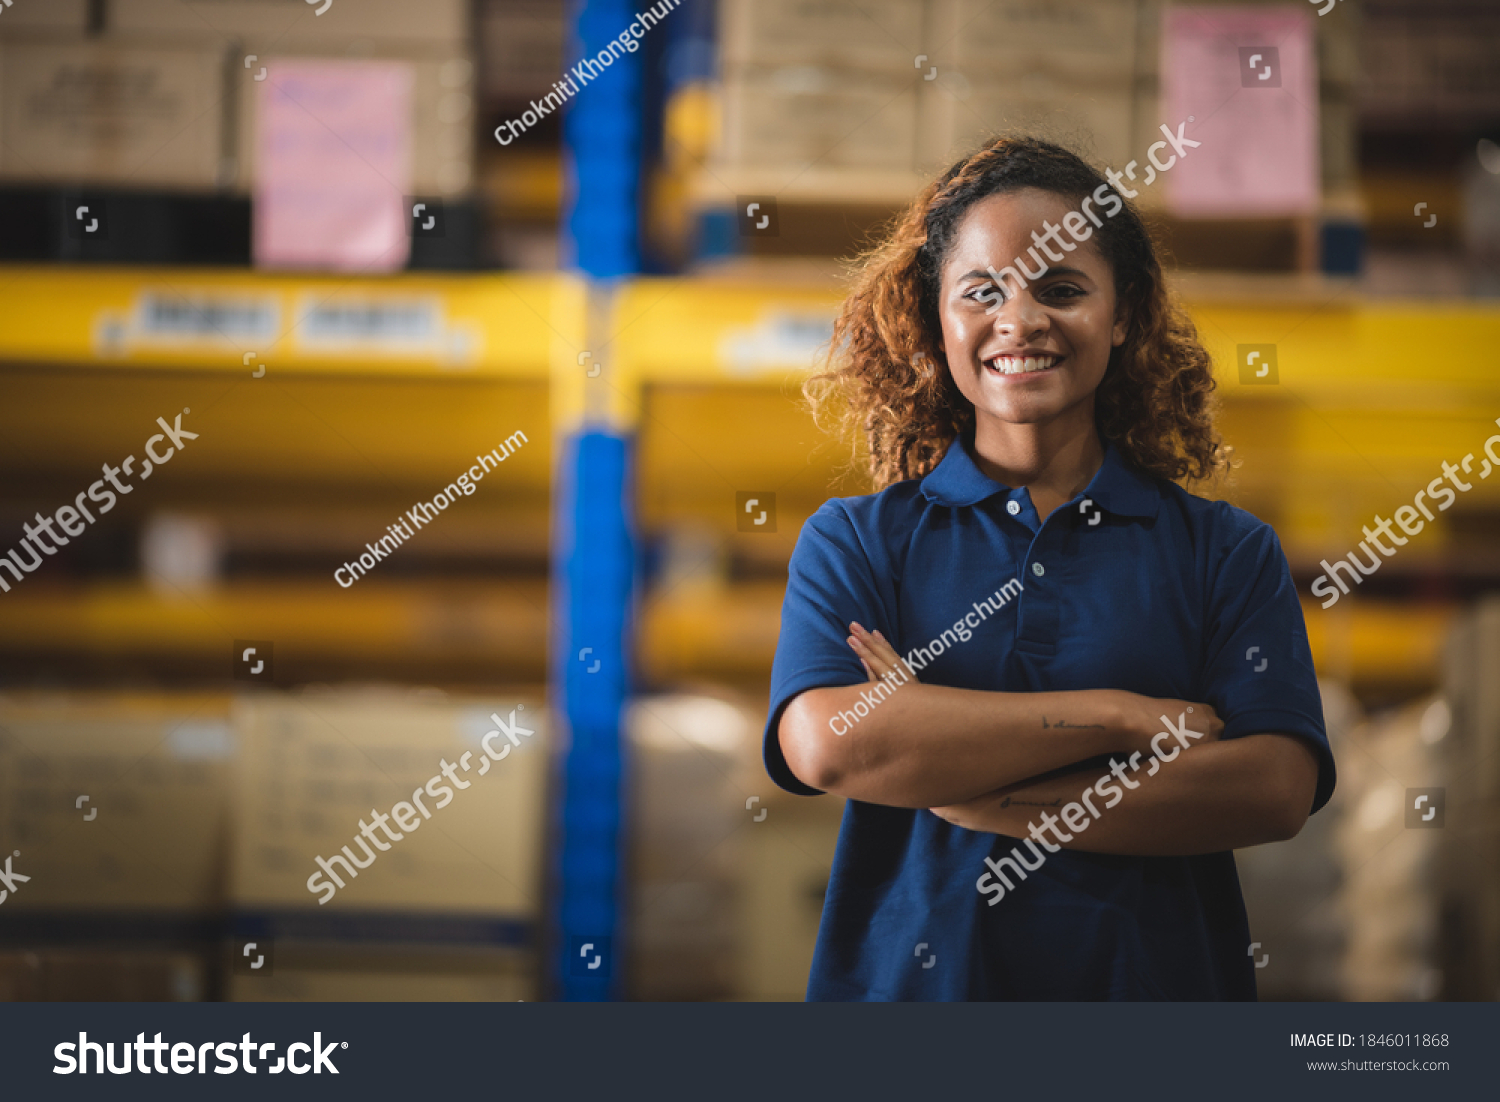 Portrait of African American worker in warehouse, International export business concept #1846011868